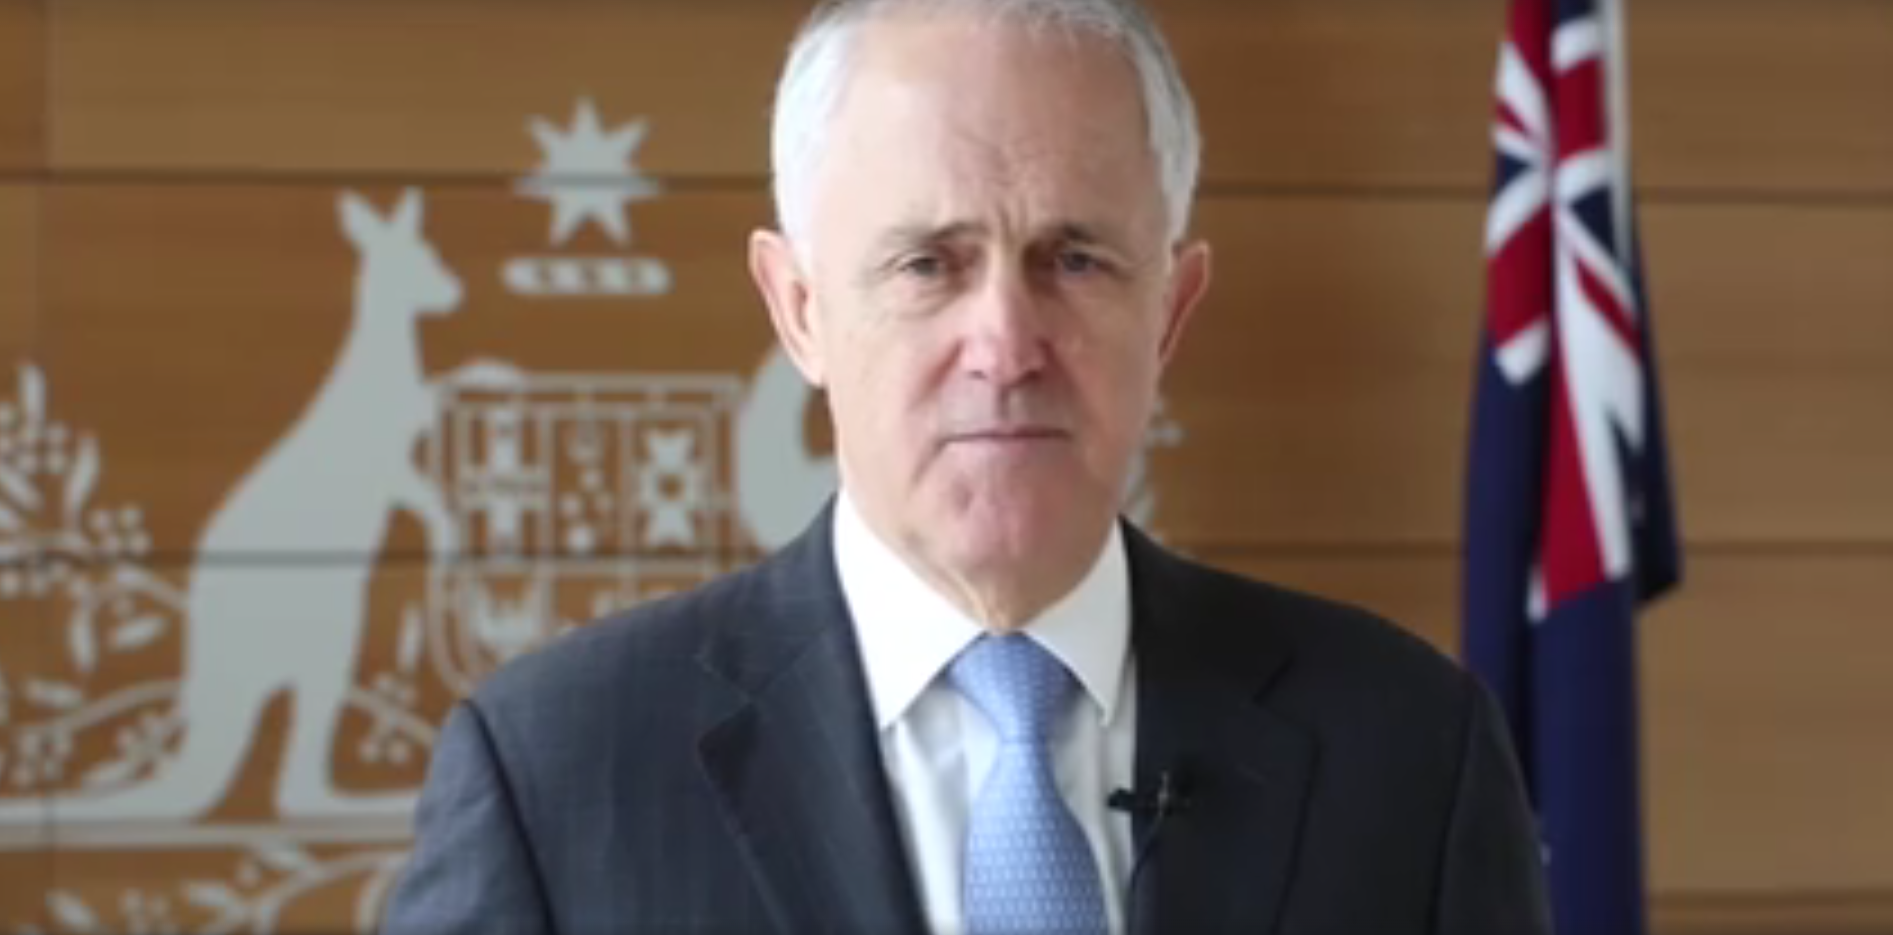 Prime Minister Malcolm Turnbull presents plebiscite legislation into parliament